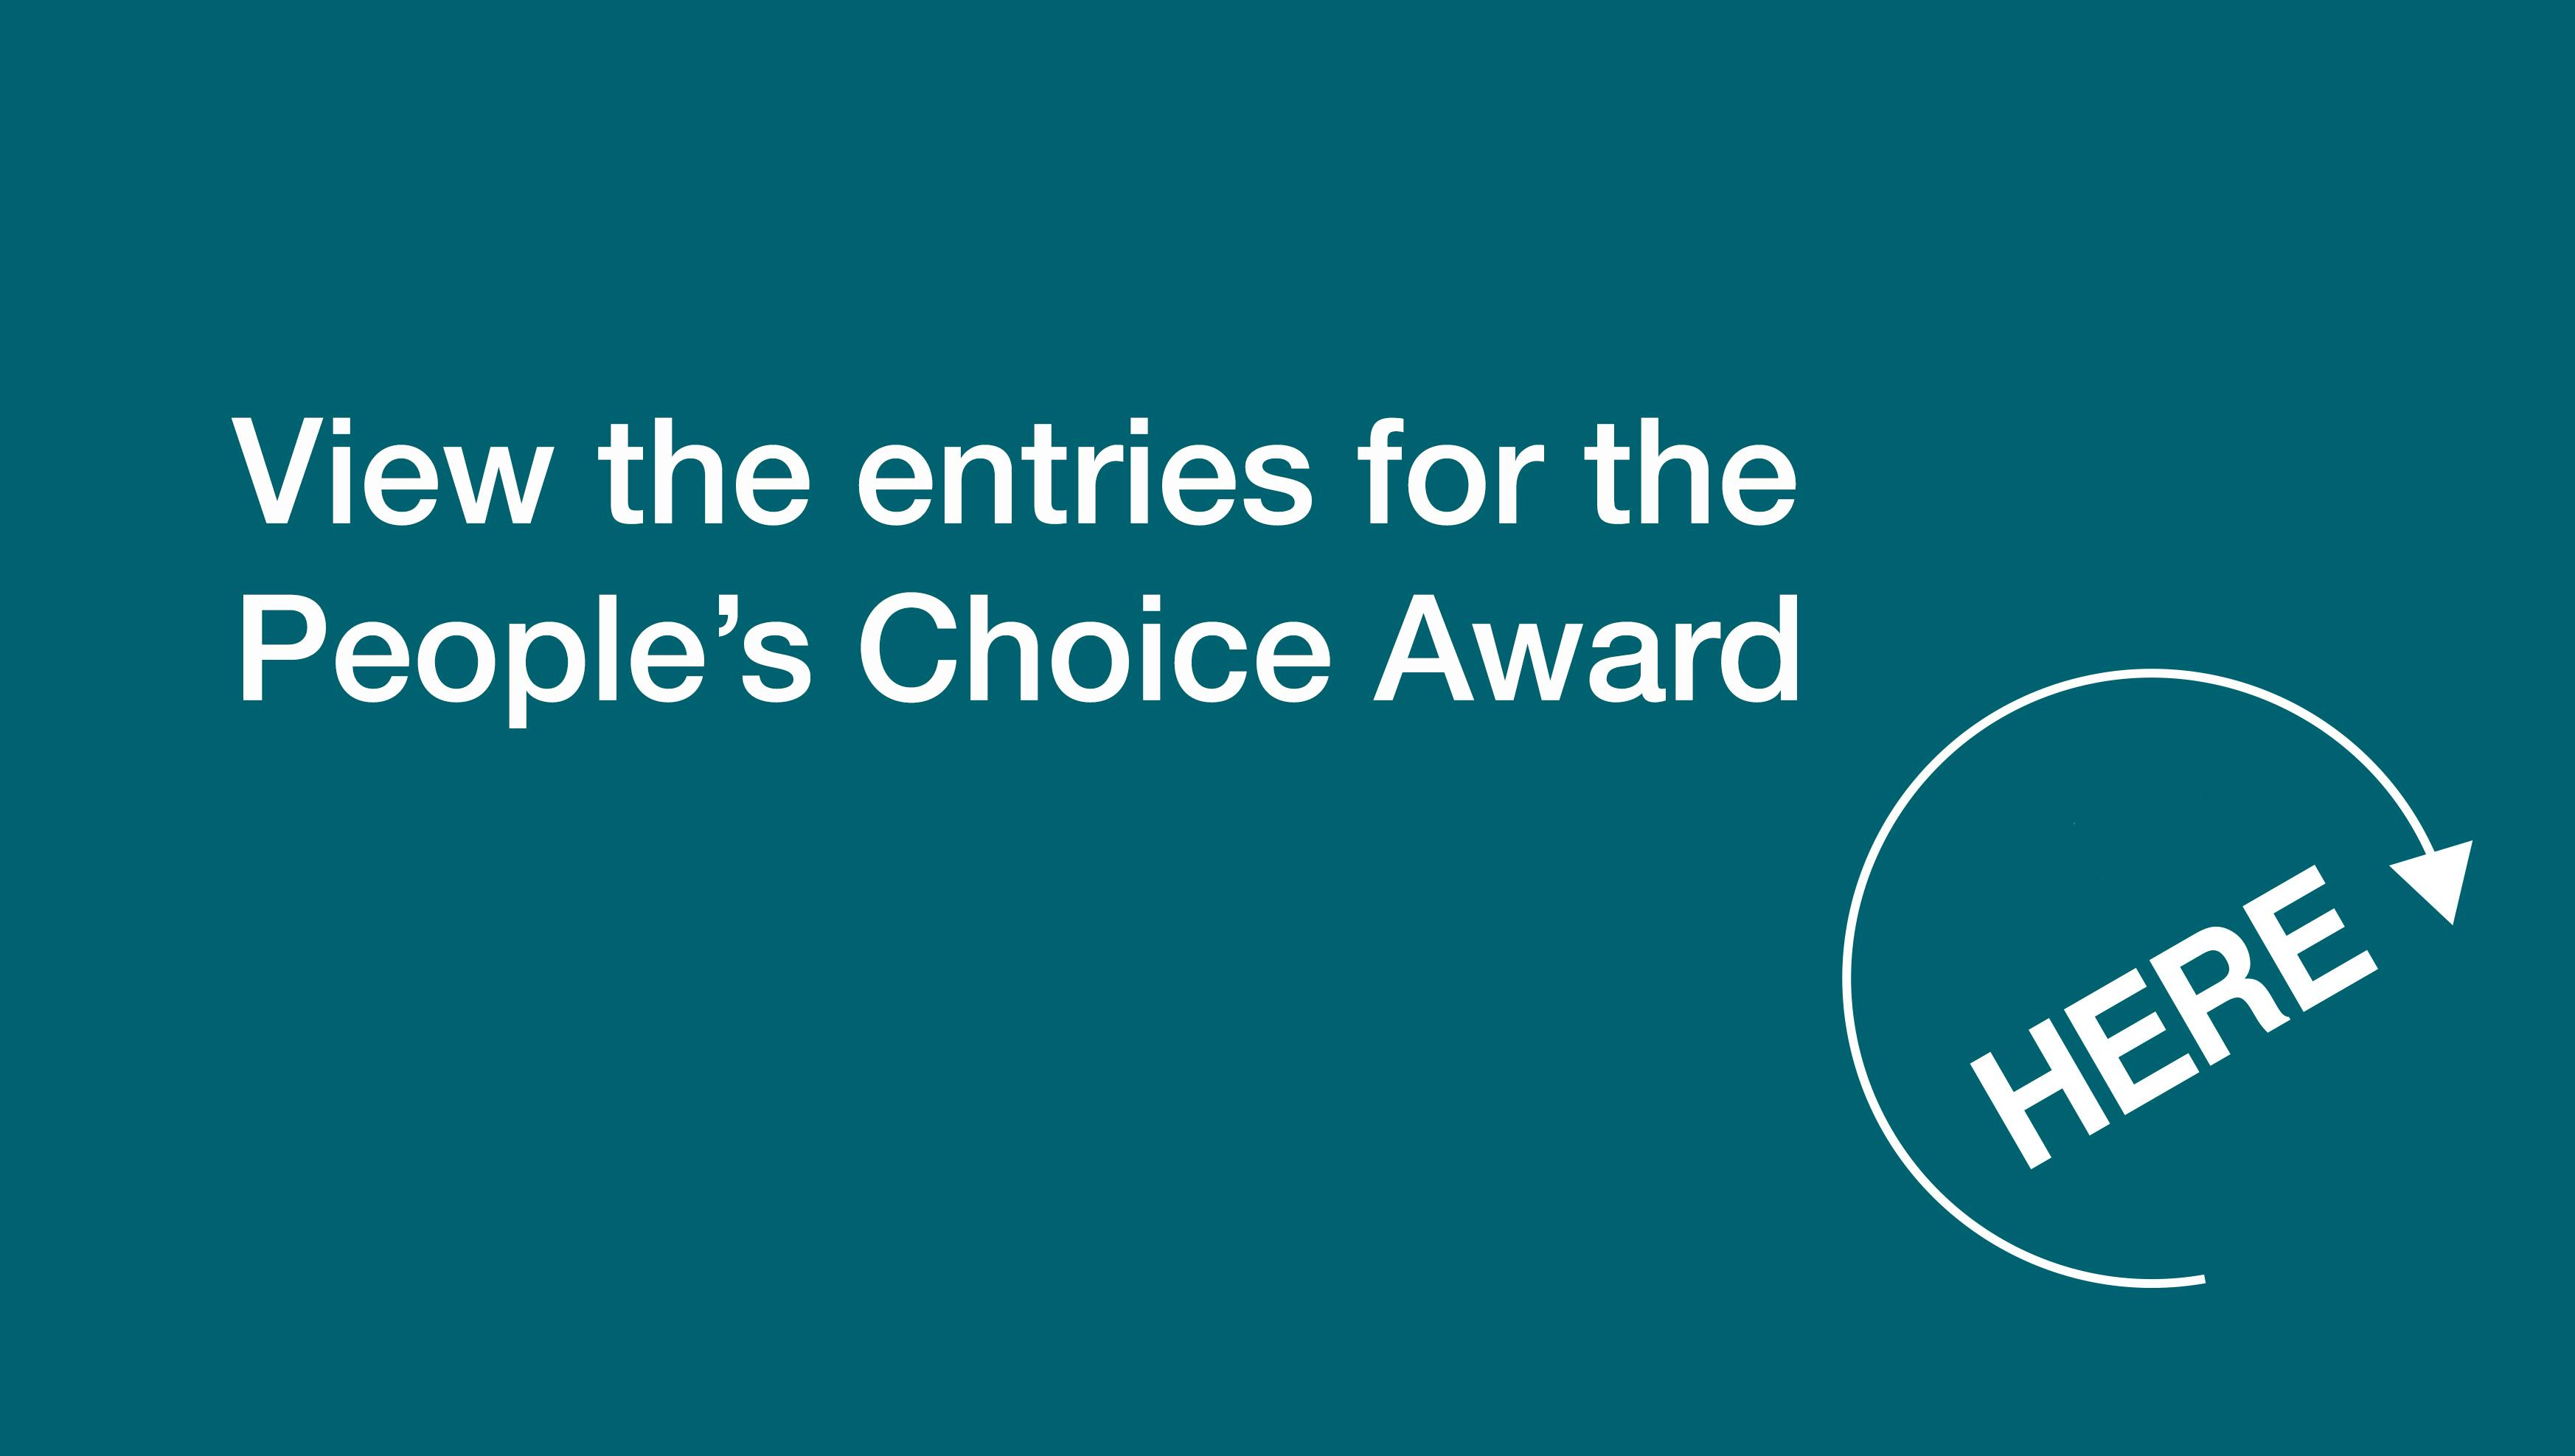 Peoples Choice Award entries